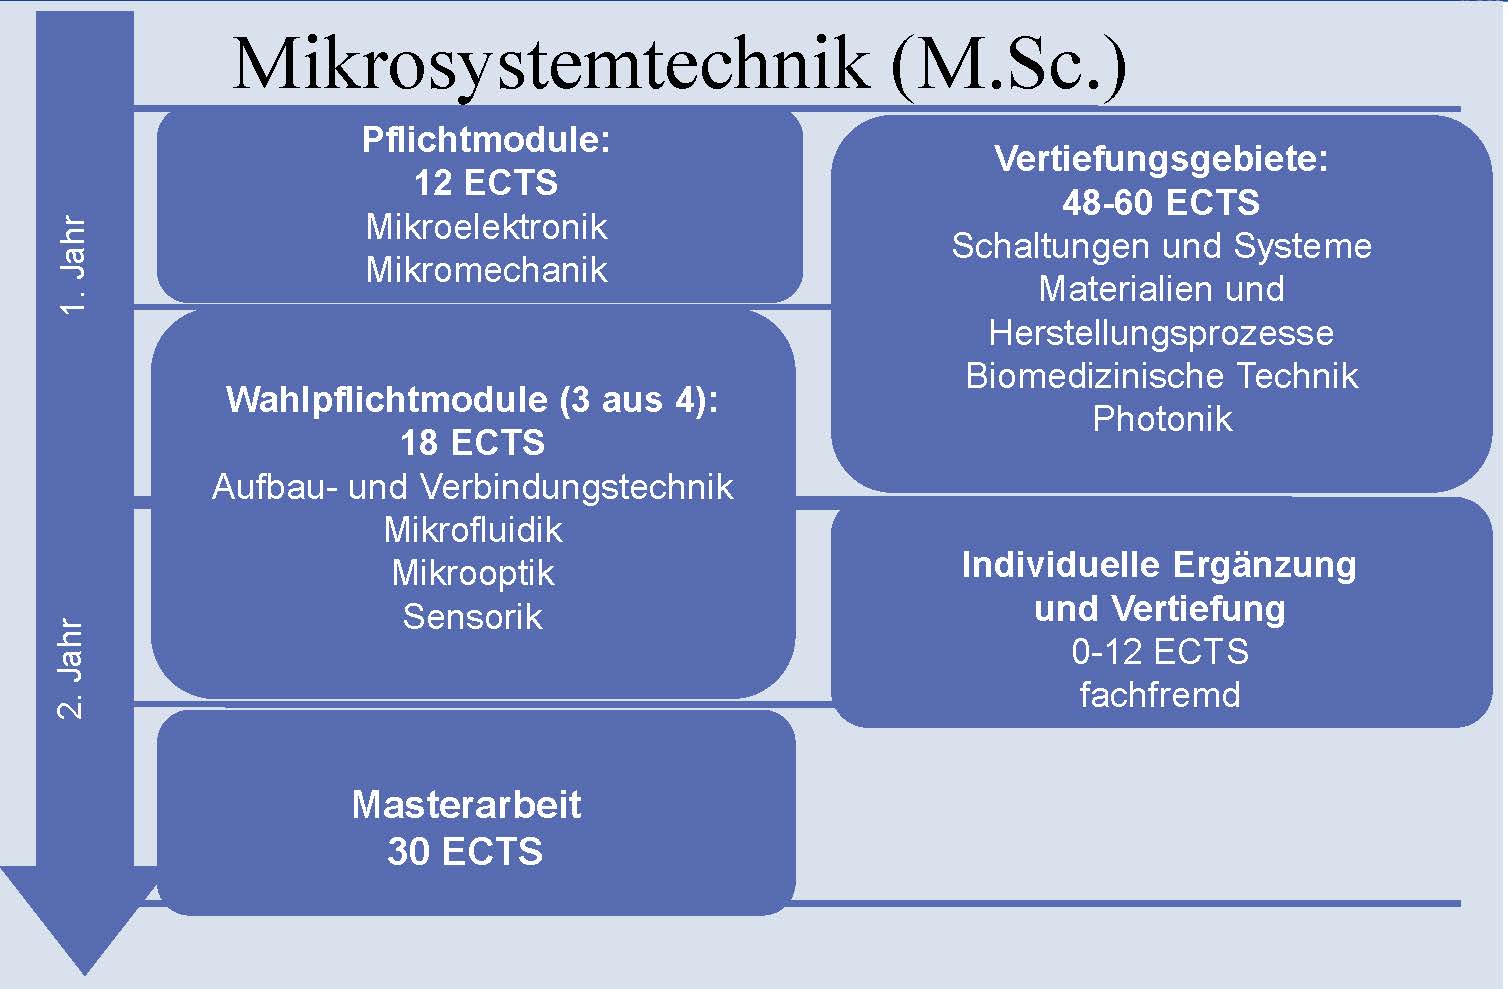 MSc. Mikrosystemtechnik Curriculum 2021